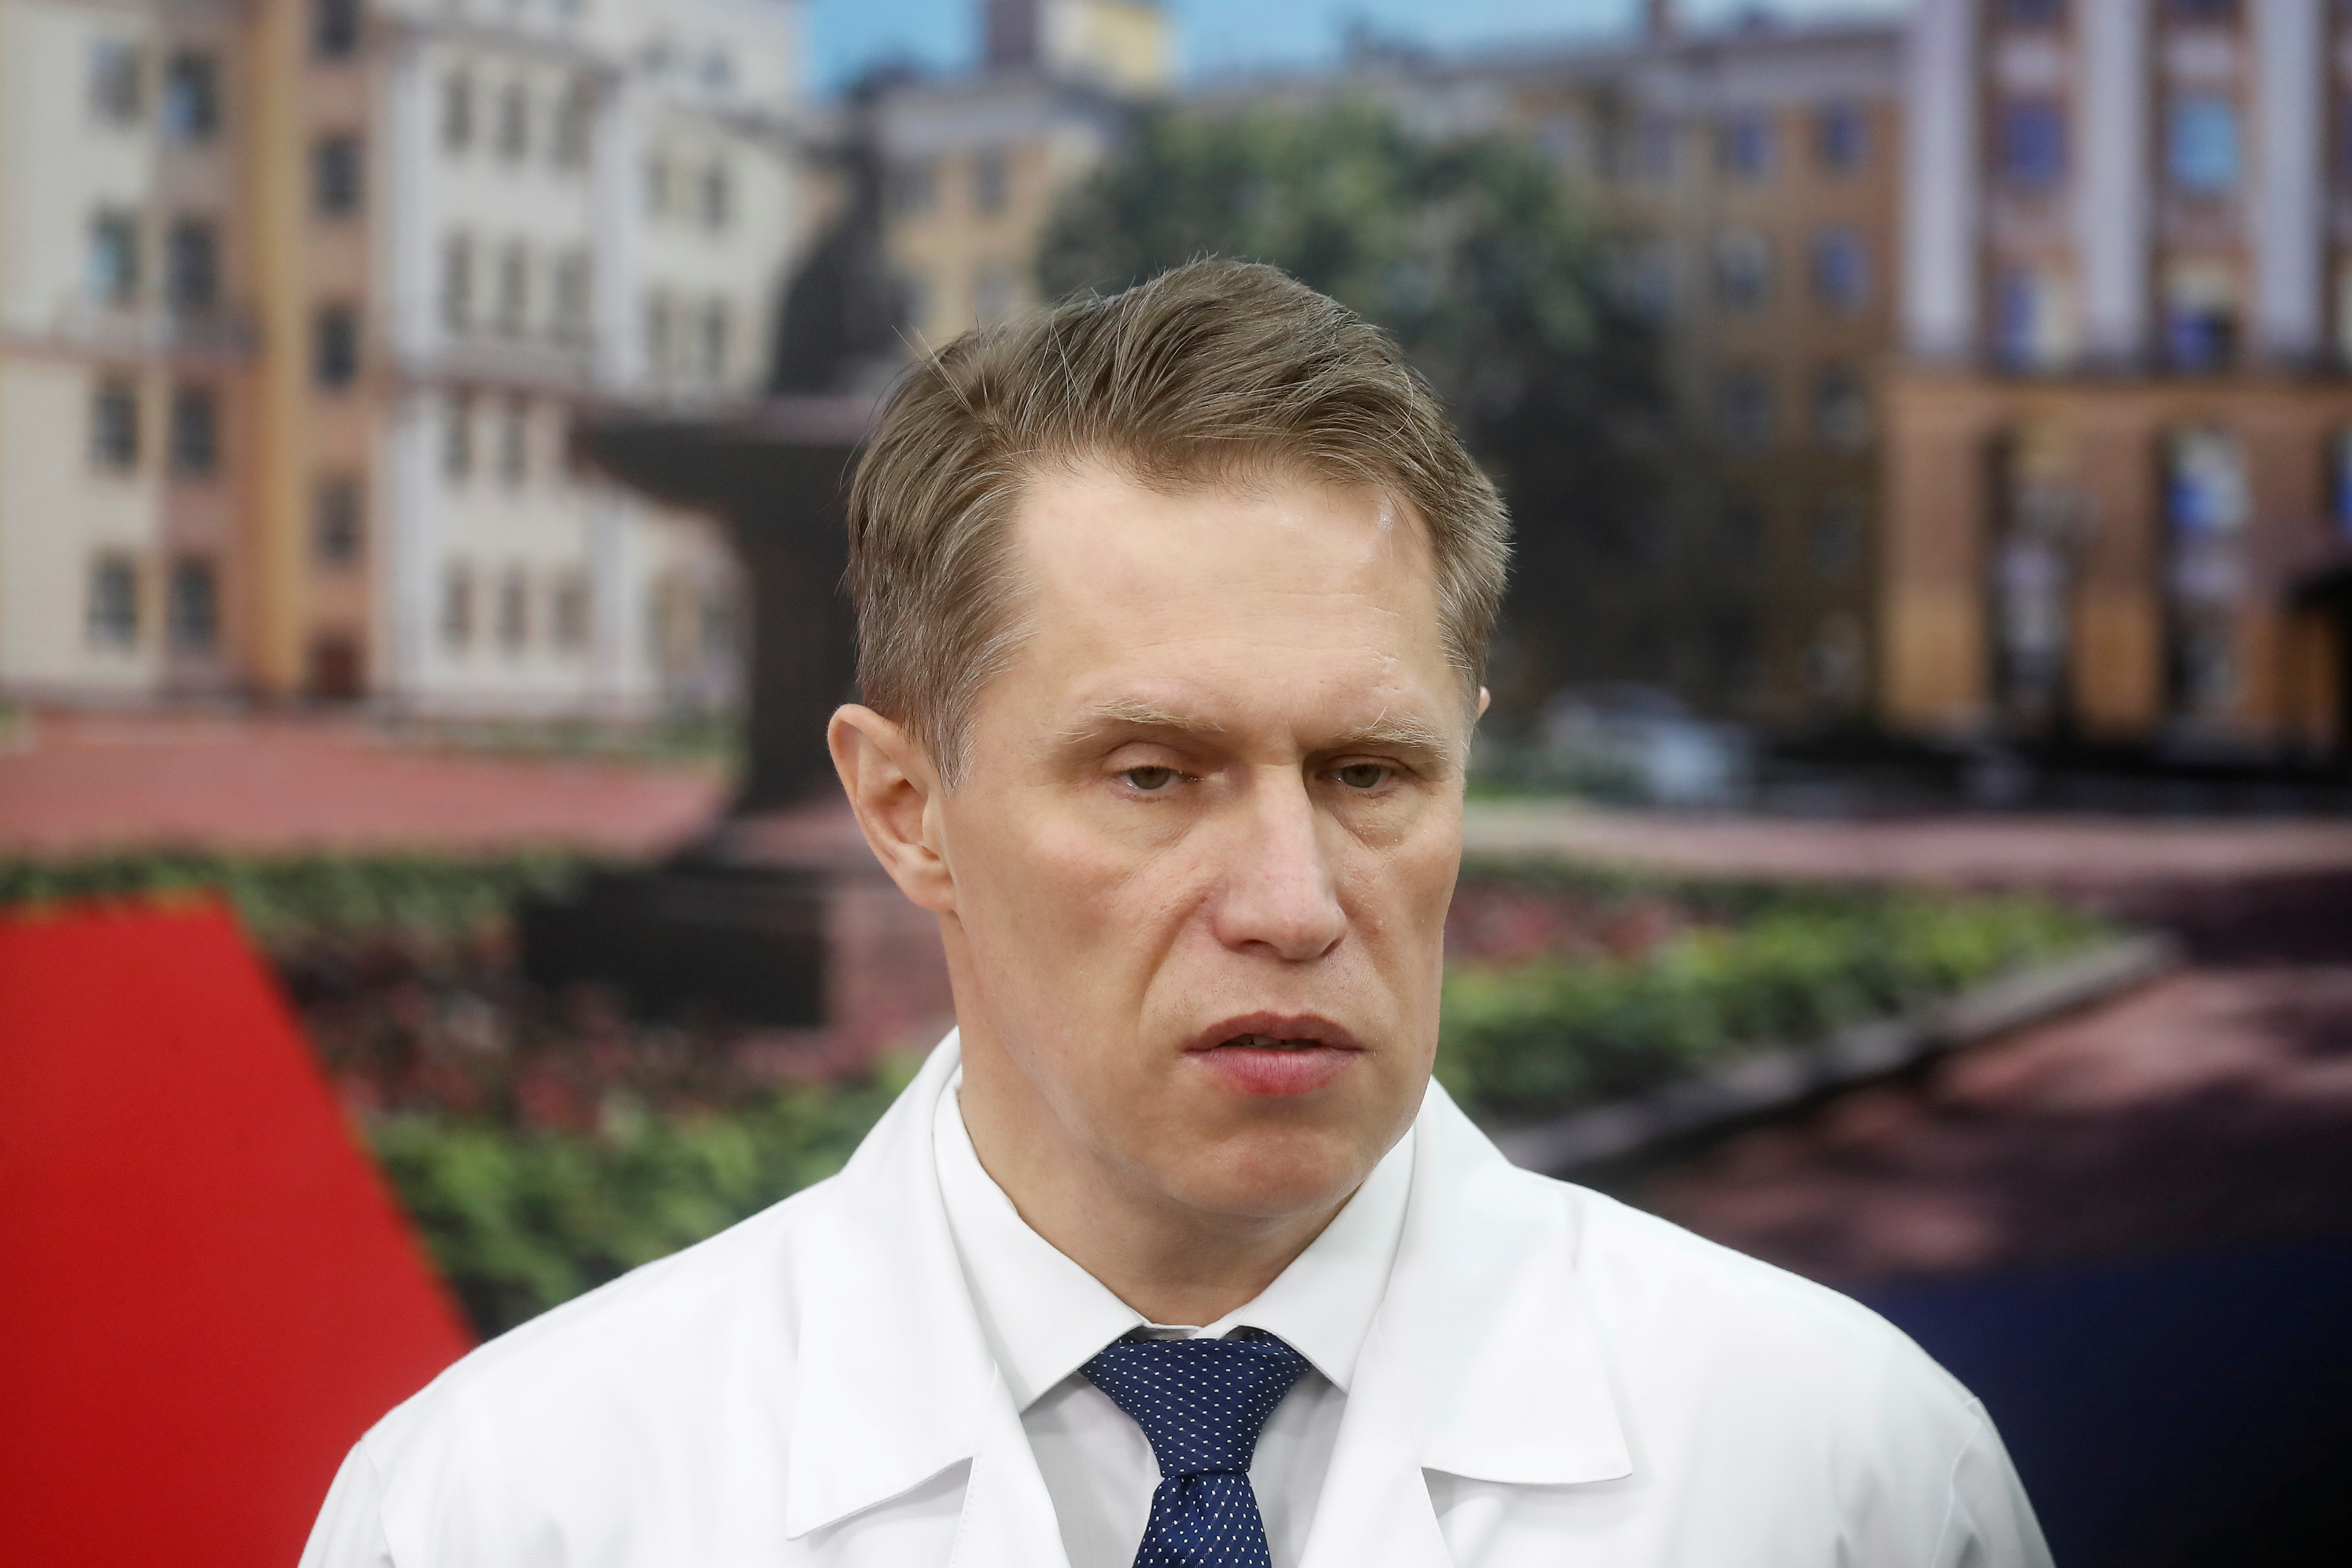  El Ministro de Salud ruso Mijáil Murashko (REUTERS)